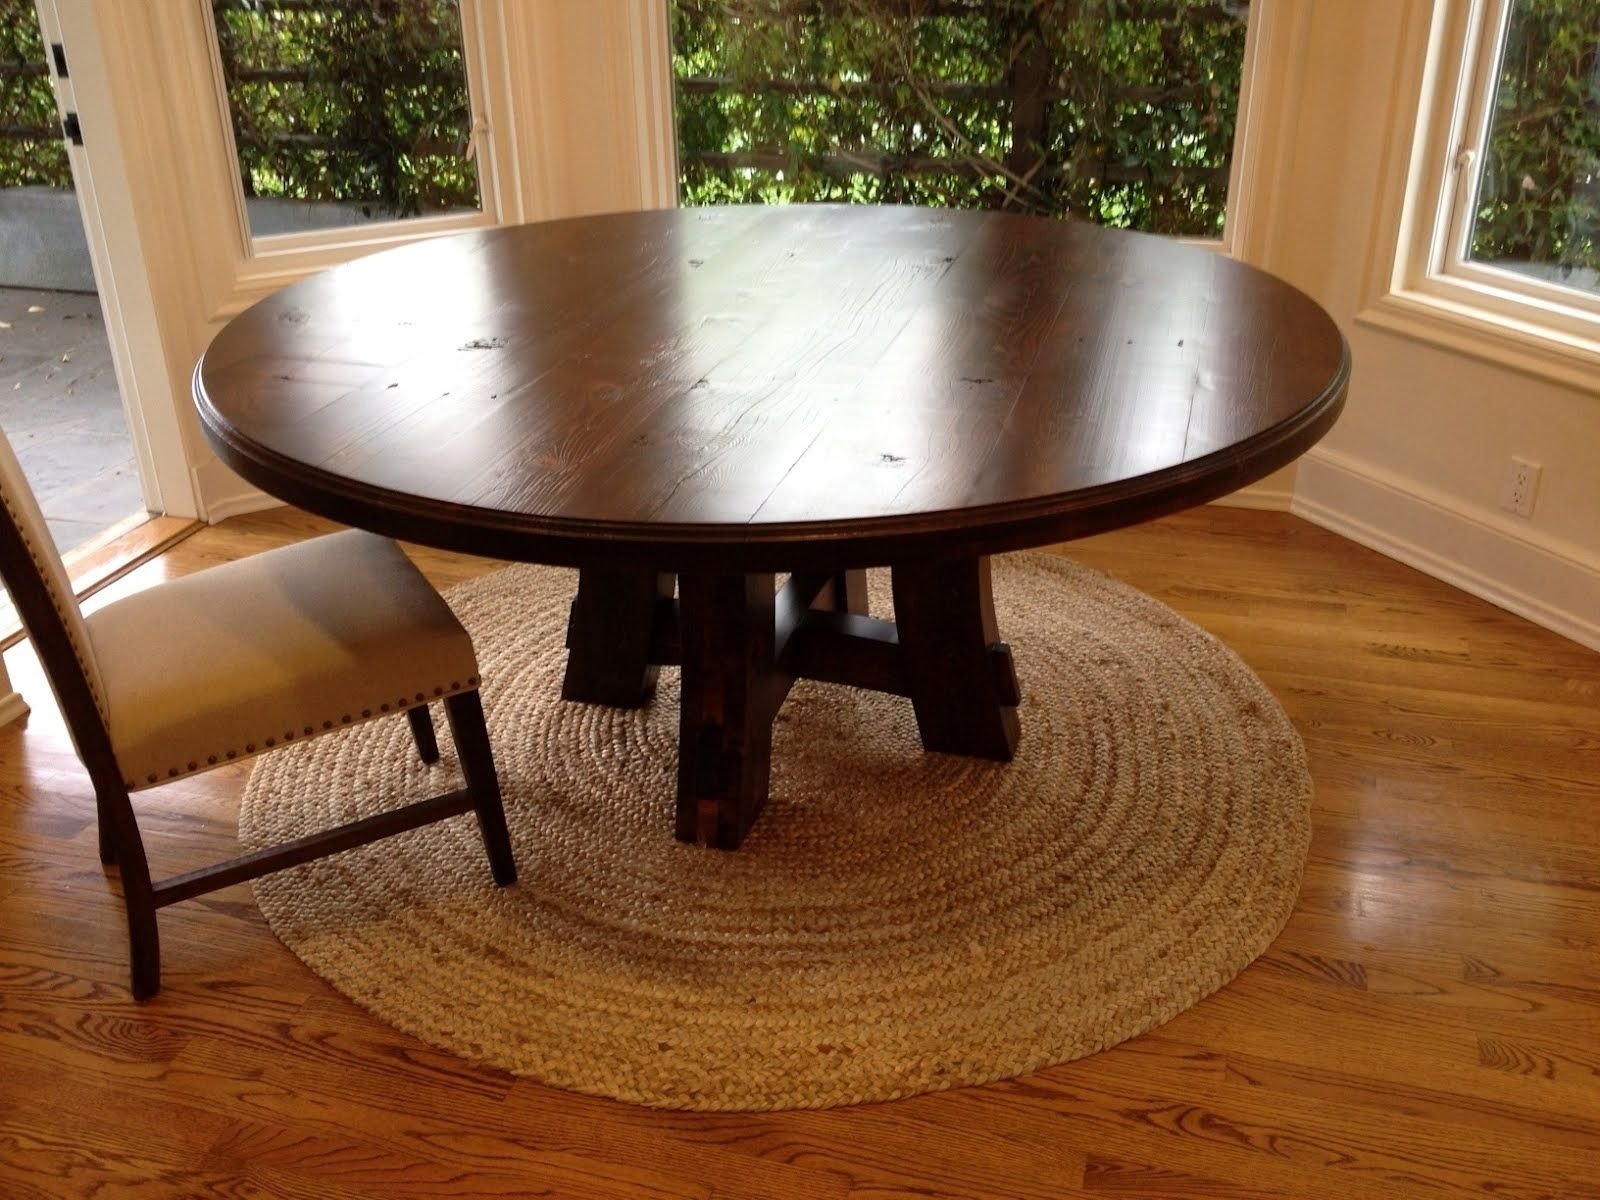 Стол круглый 1 м диаметр. Что такое раунд тейбл (Round Table). Круглый деревянный стол. Круглый стол в интерьере. Круглый деревянный столик.